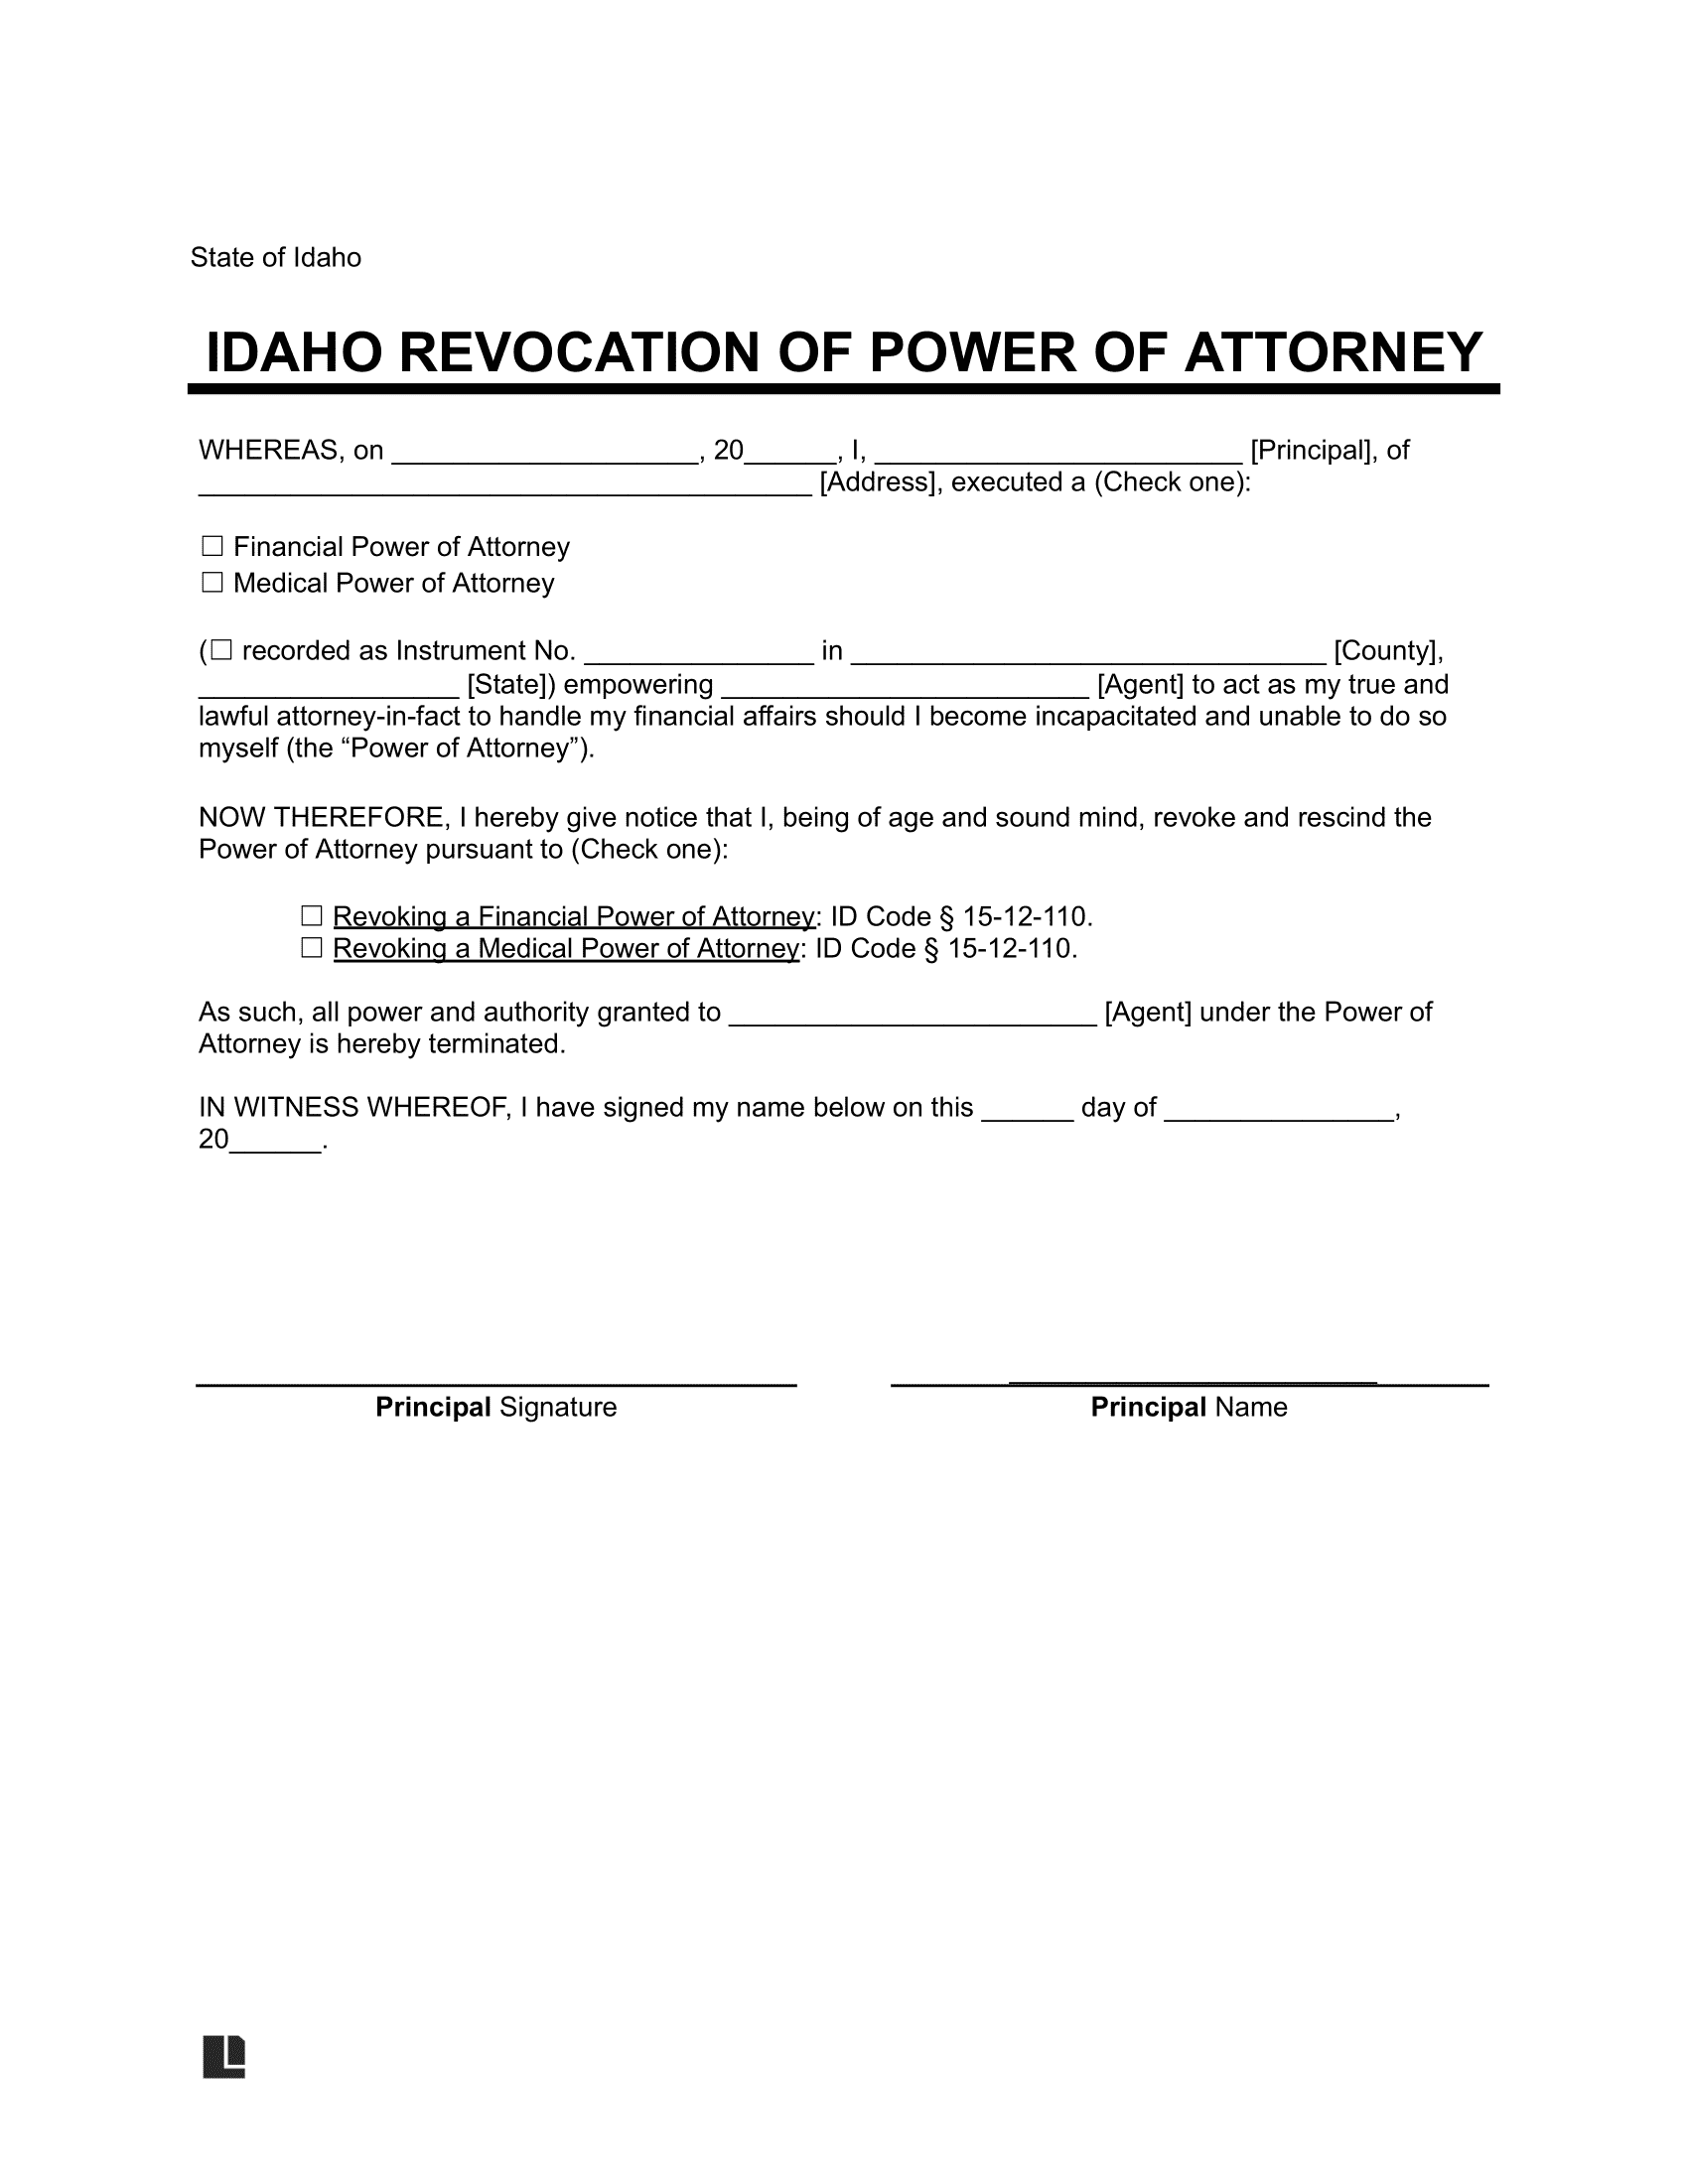 Idaho Revocation Power of Attorney Form